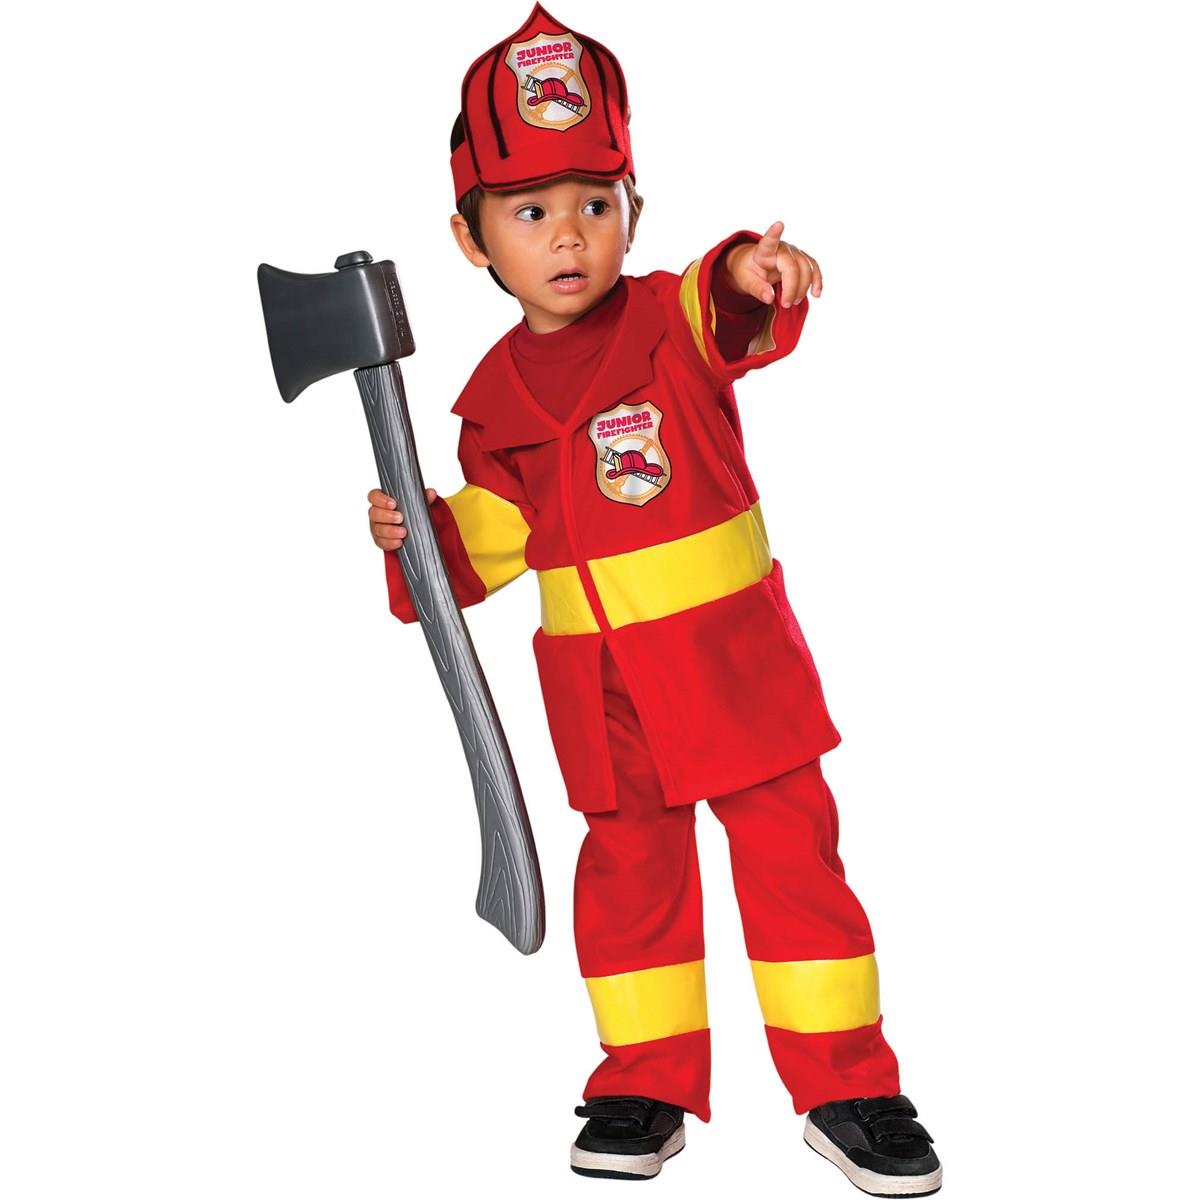 279926 Infant Jr. Firefighter Costume